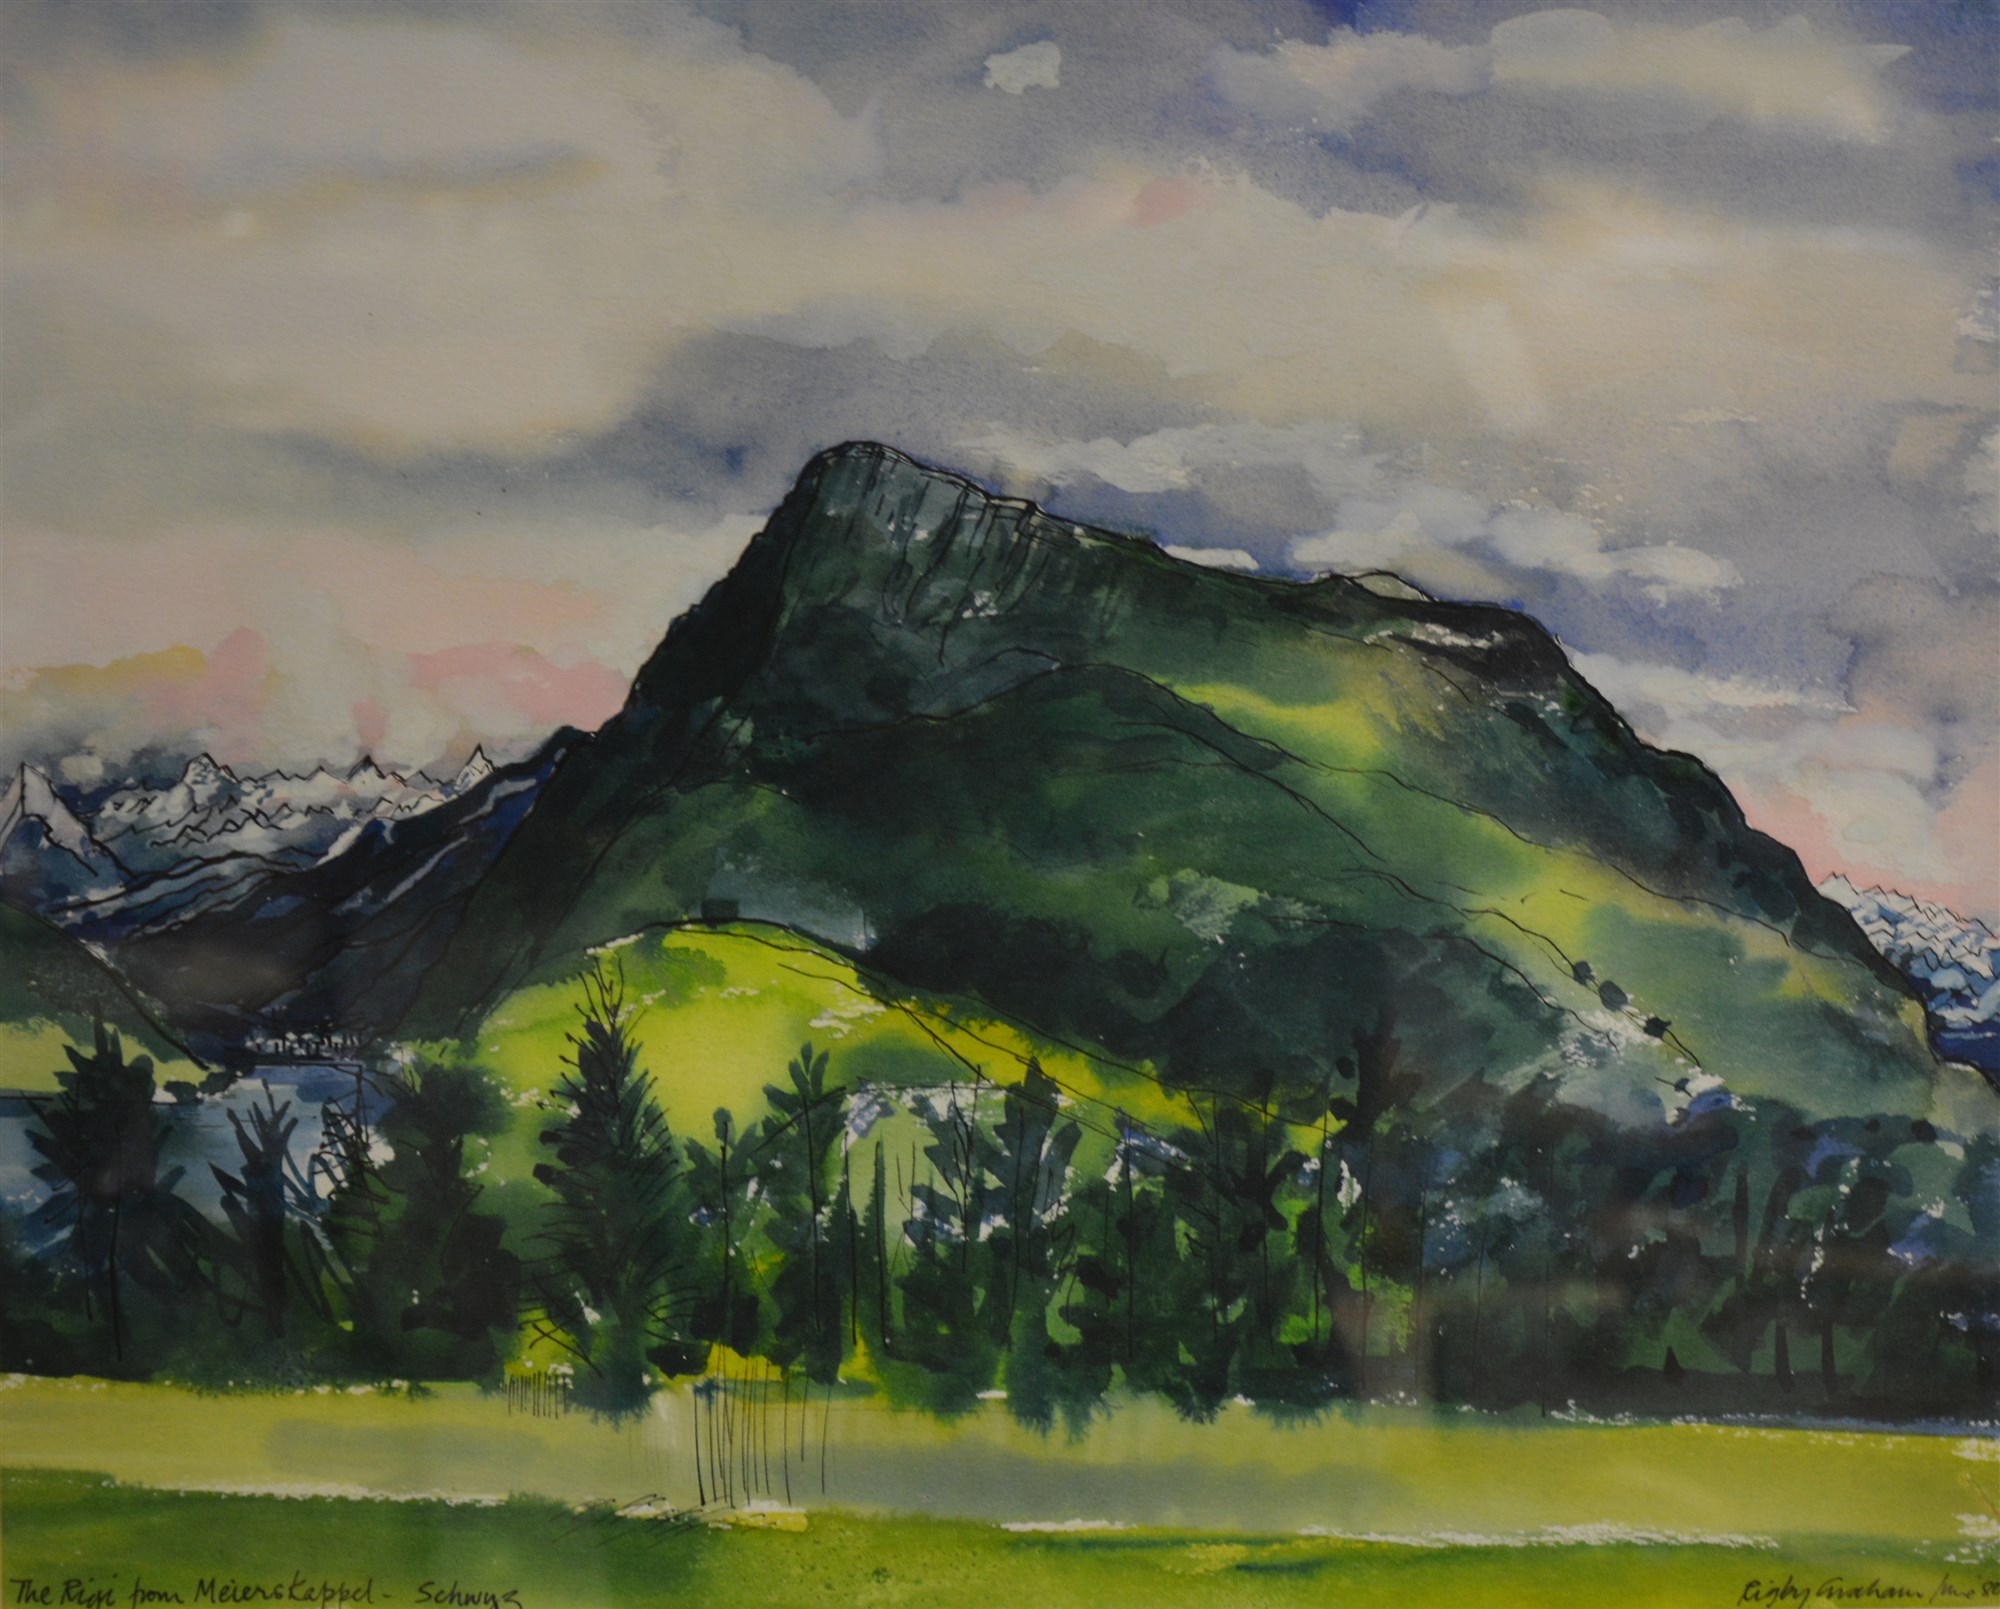 Rigby Graham, The Rigi from Meierskappel - Schwyz, watercolour.